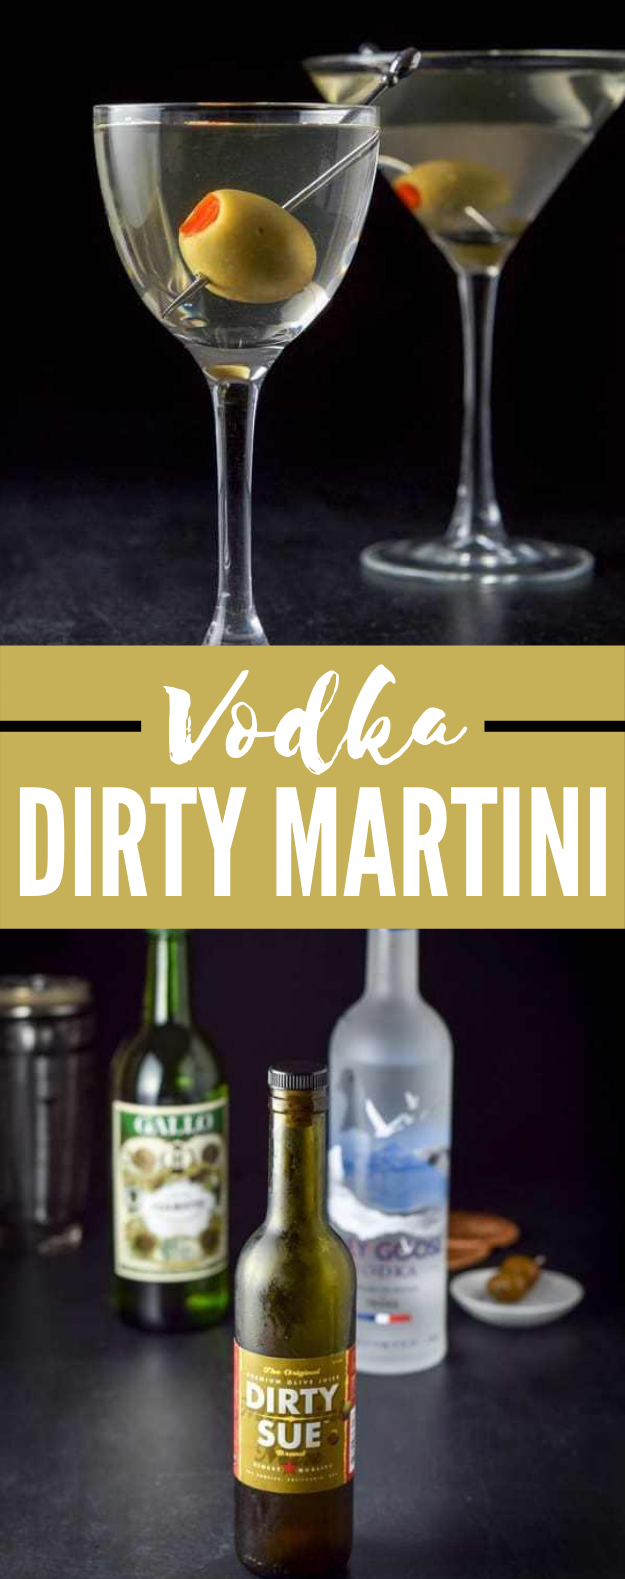 VODKA DIRTY MARTINI RECIPE #drinks #cocktails #vodka #partydrink #martini